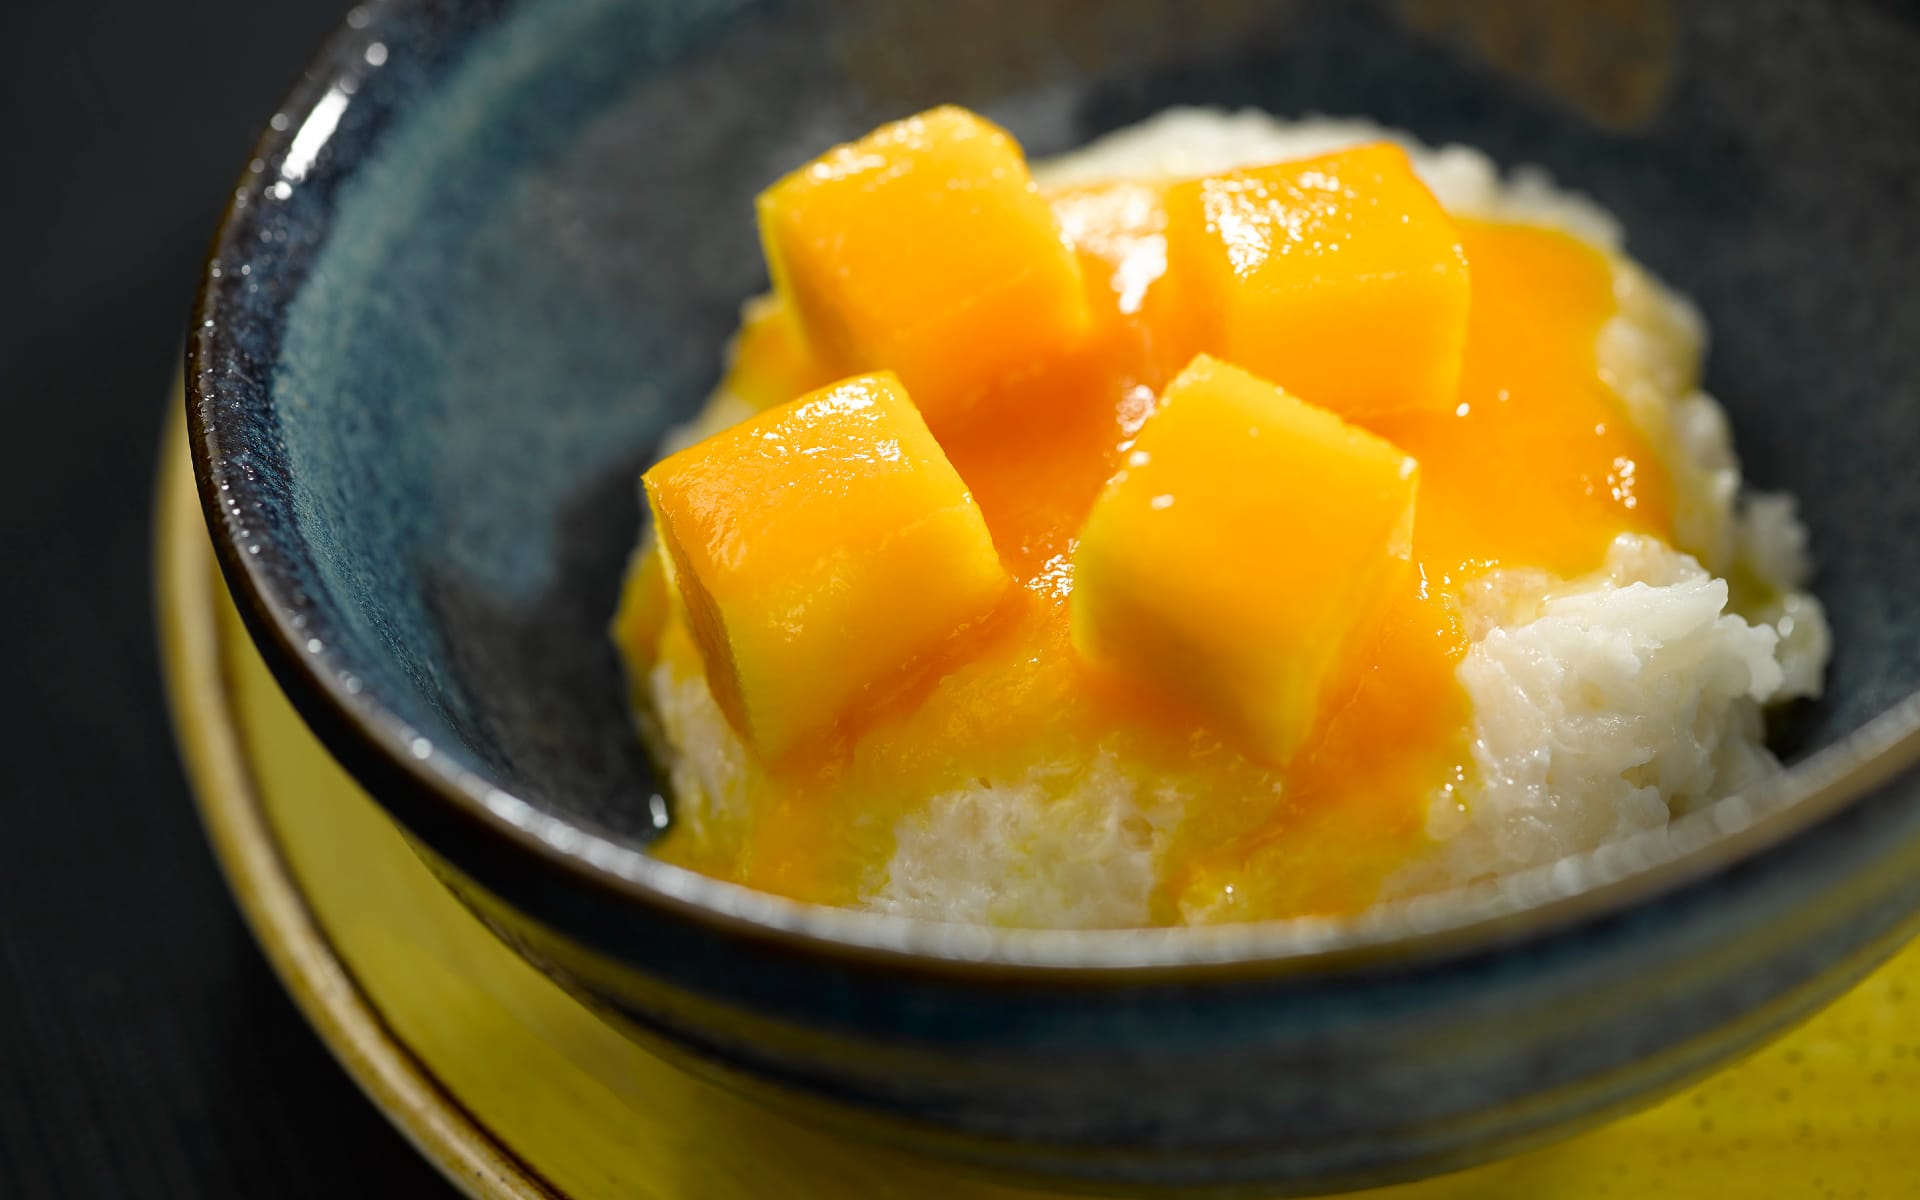 A mango dessert with Oceania Cruises